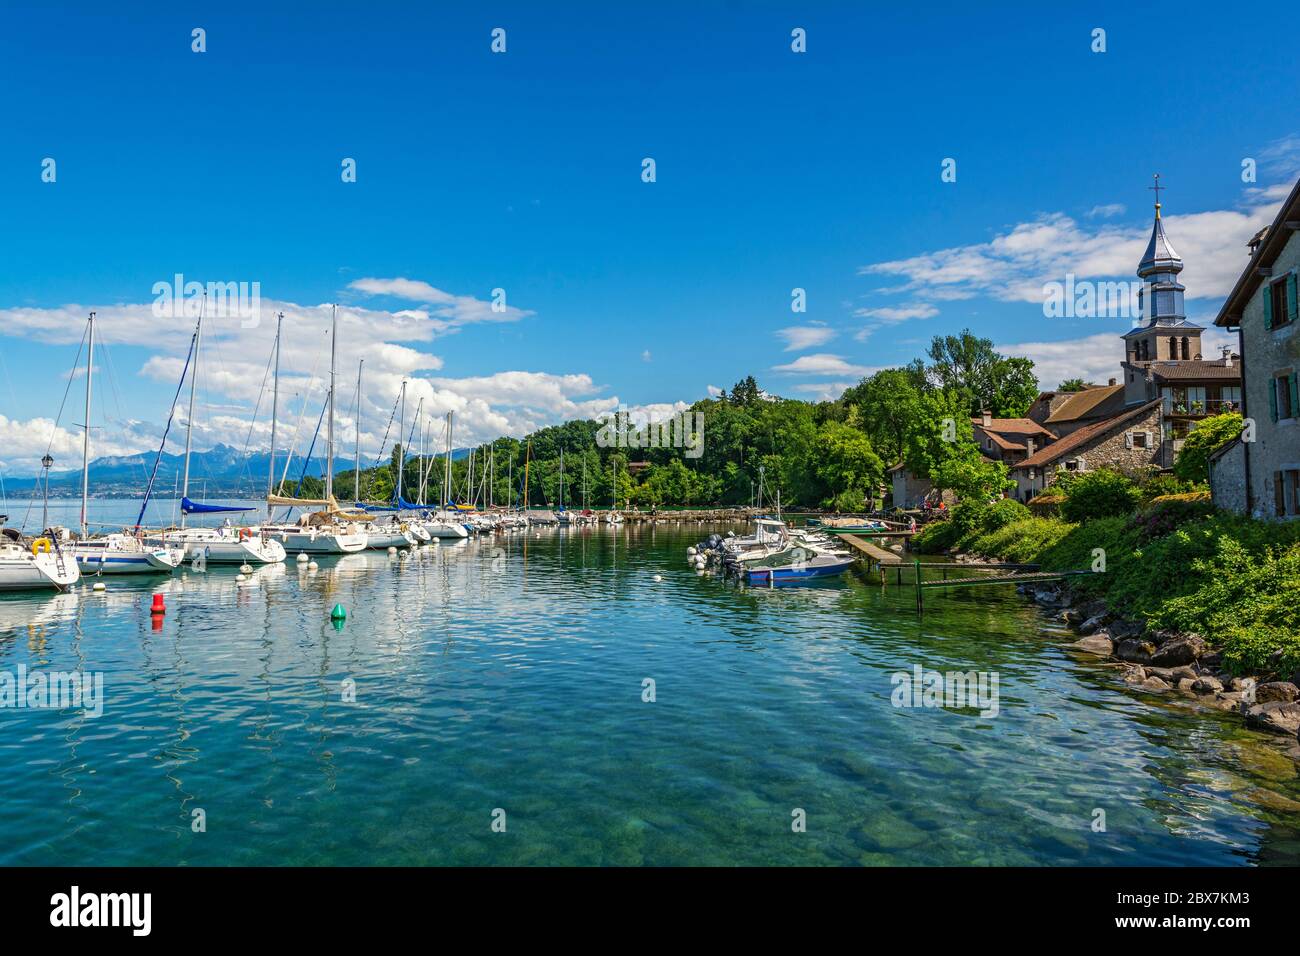 France, Yvoire, Port des Pecheurs (fishermen's harbor), Lake Geneva (Lac Leman), St Pancrace church Stock Photo